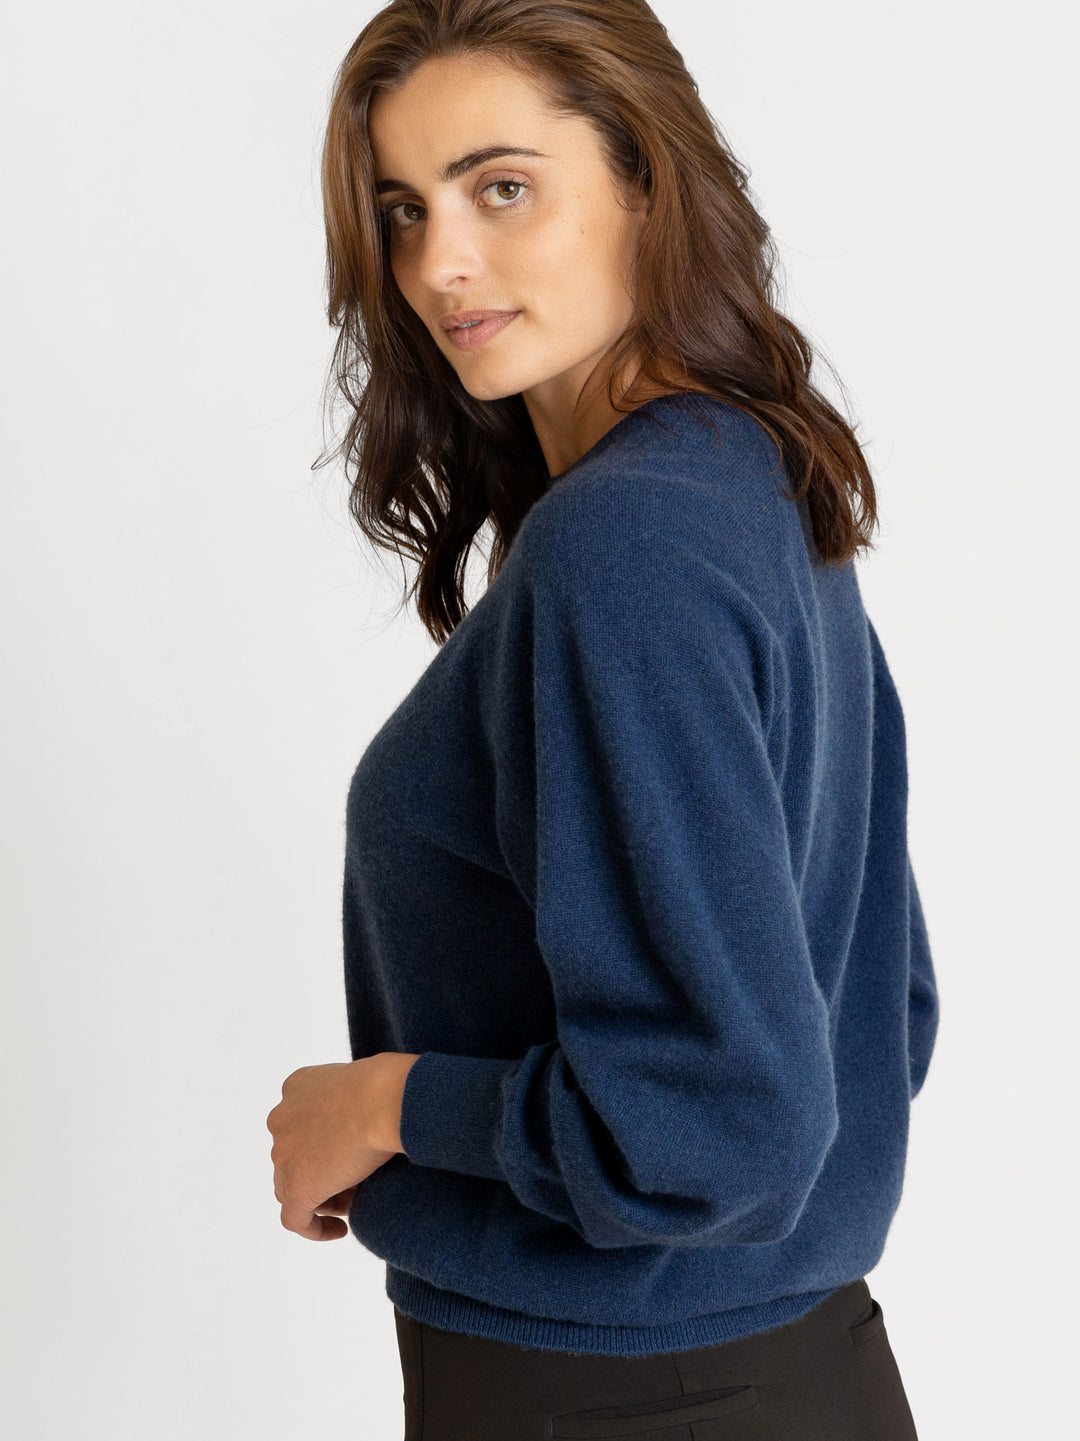 Cashmere sweater "Embla" 100% cashmere from Kashmina